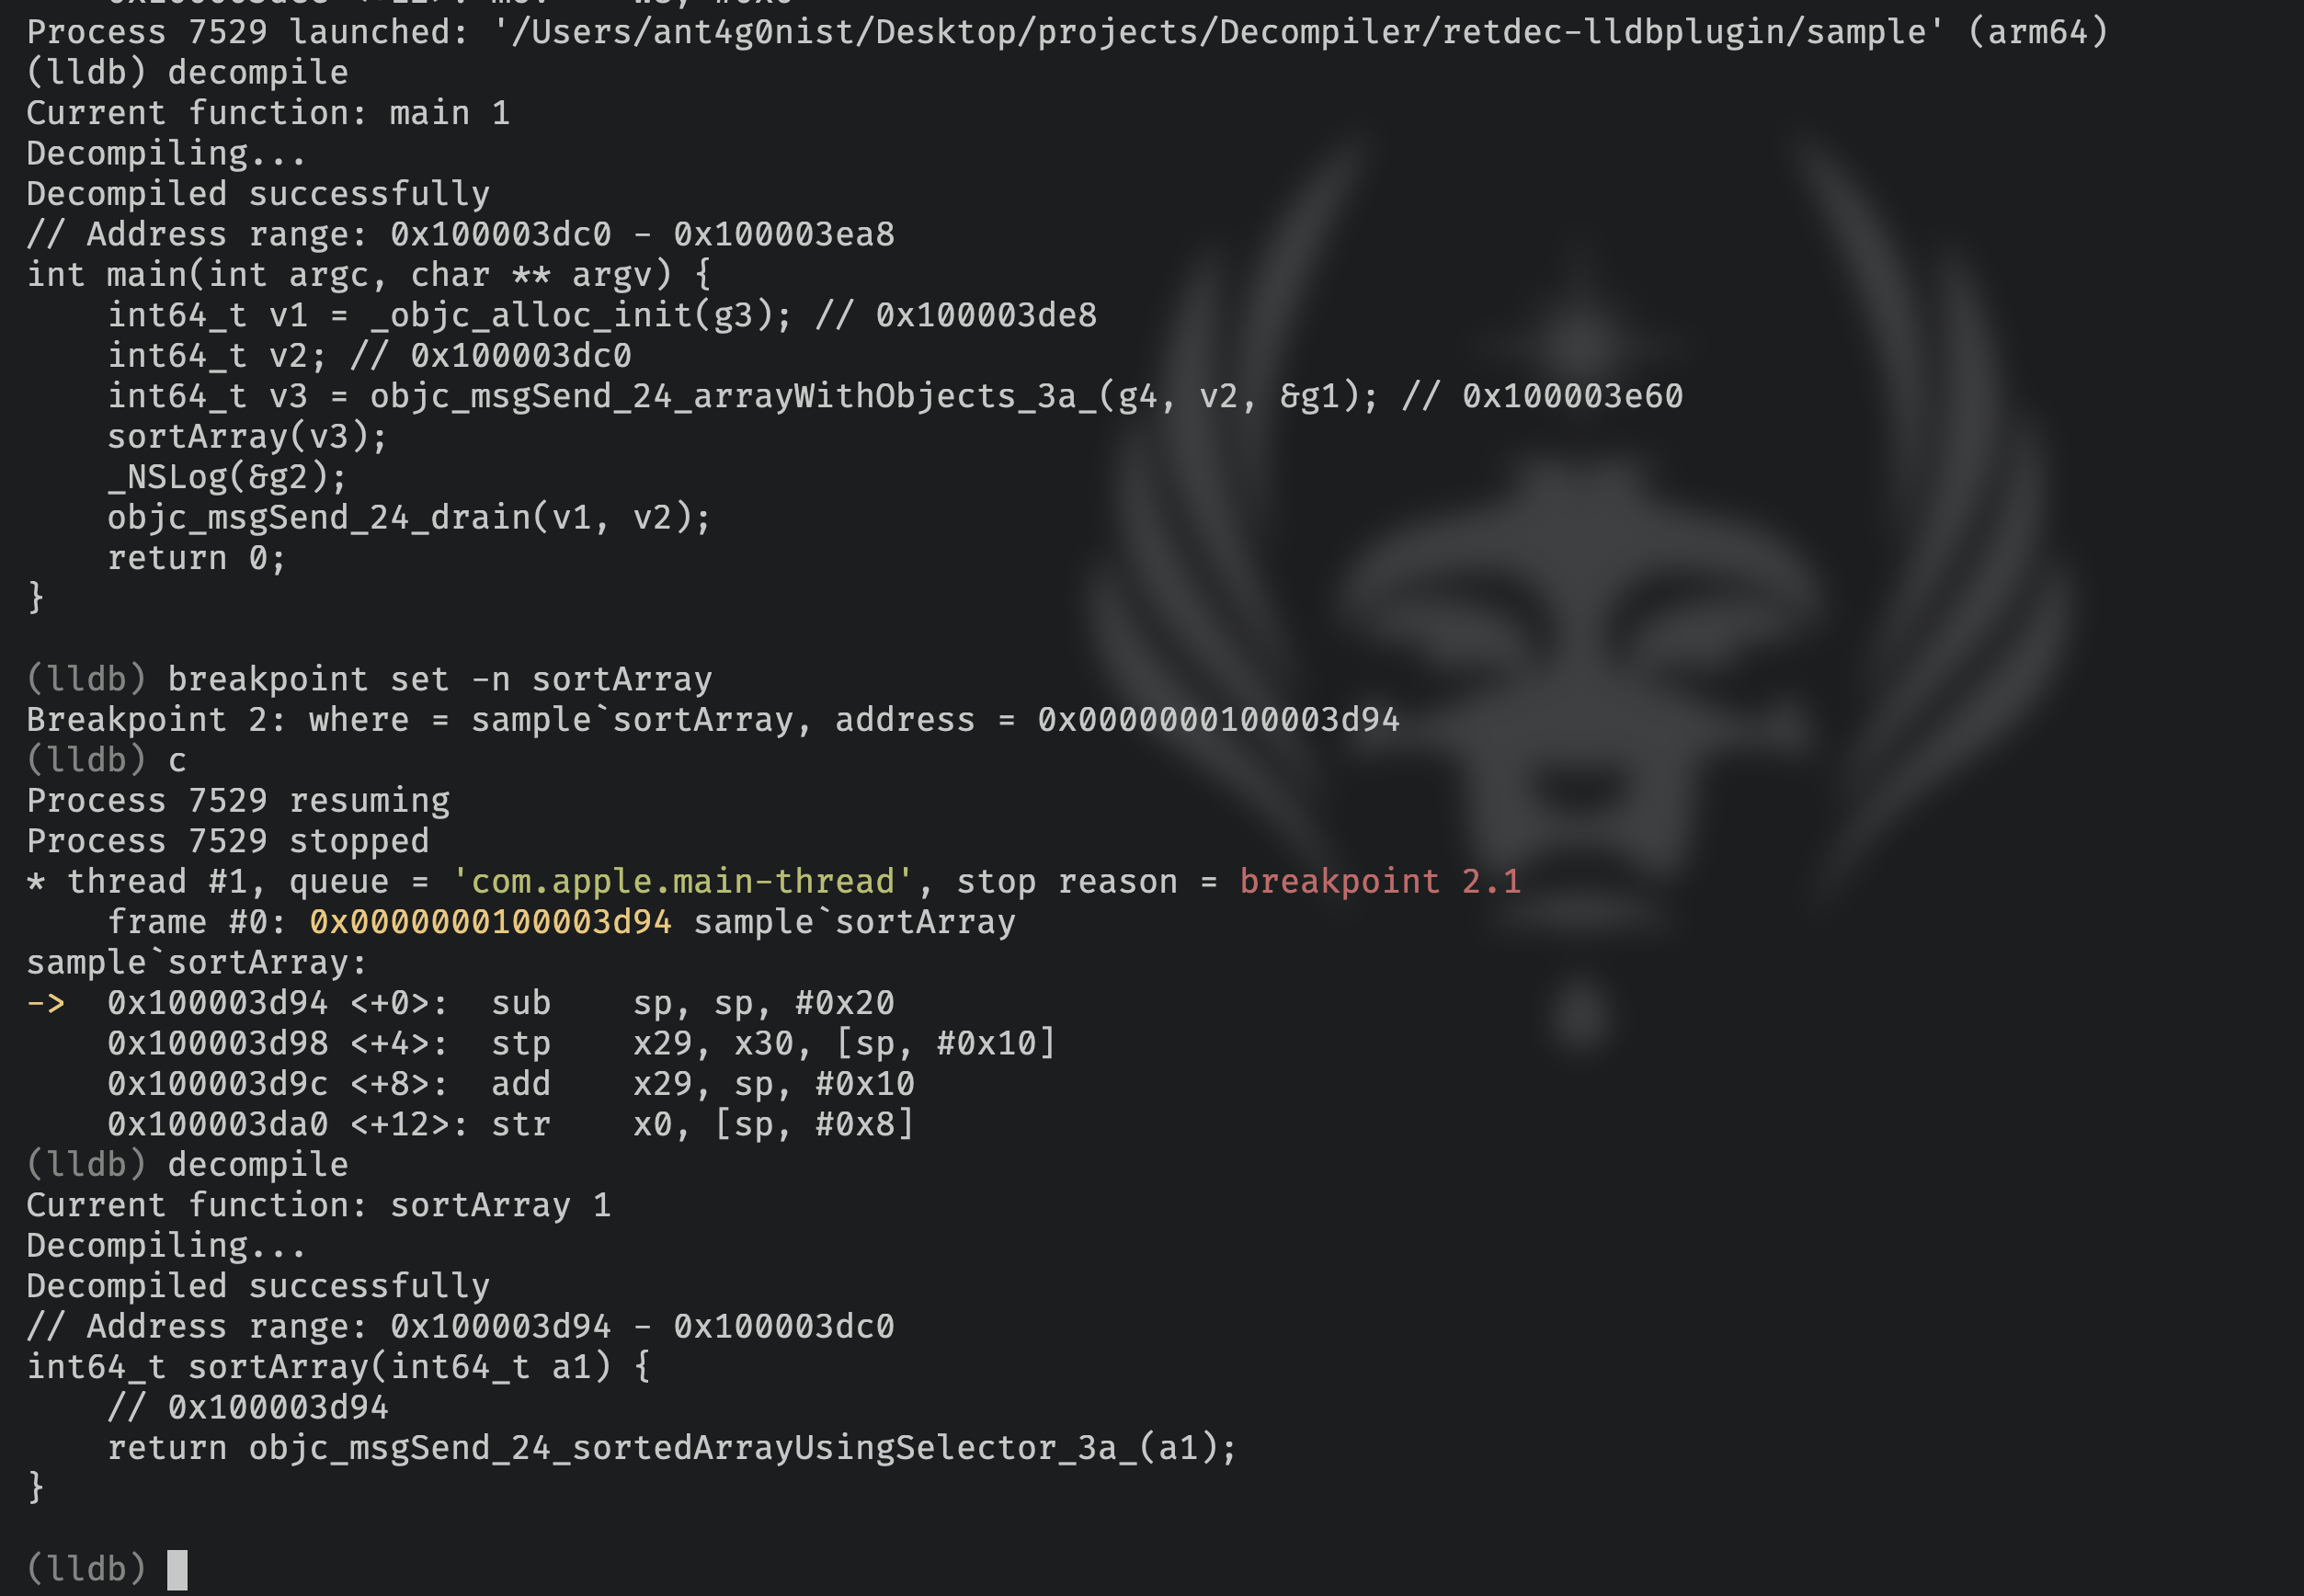 Decompile command output screenshot